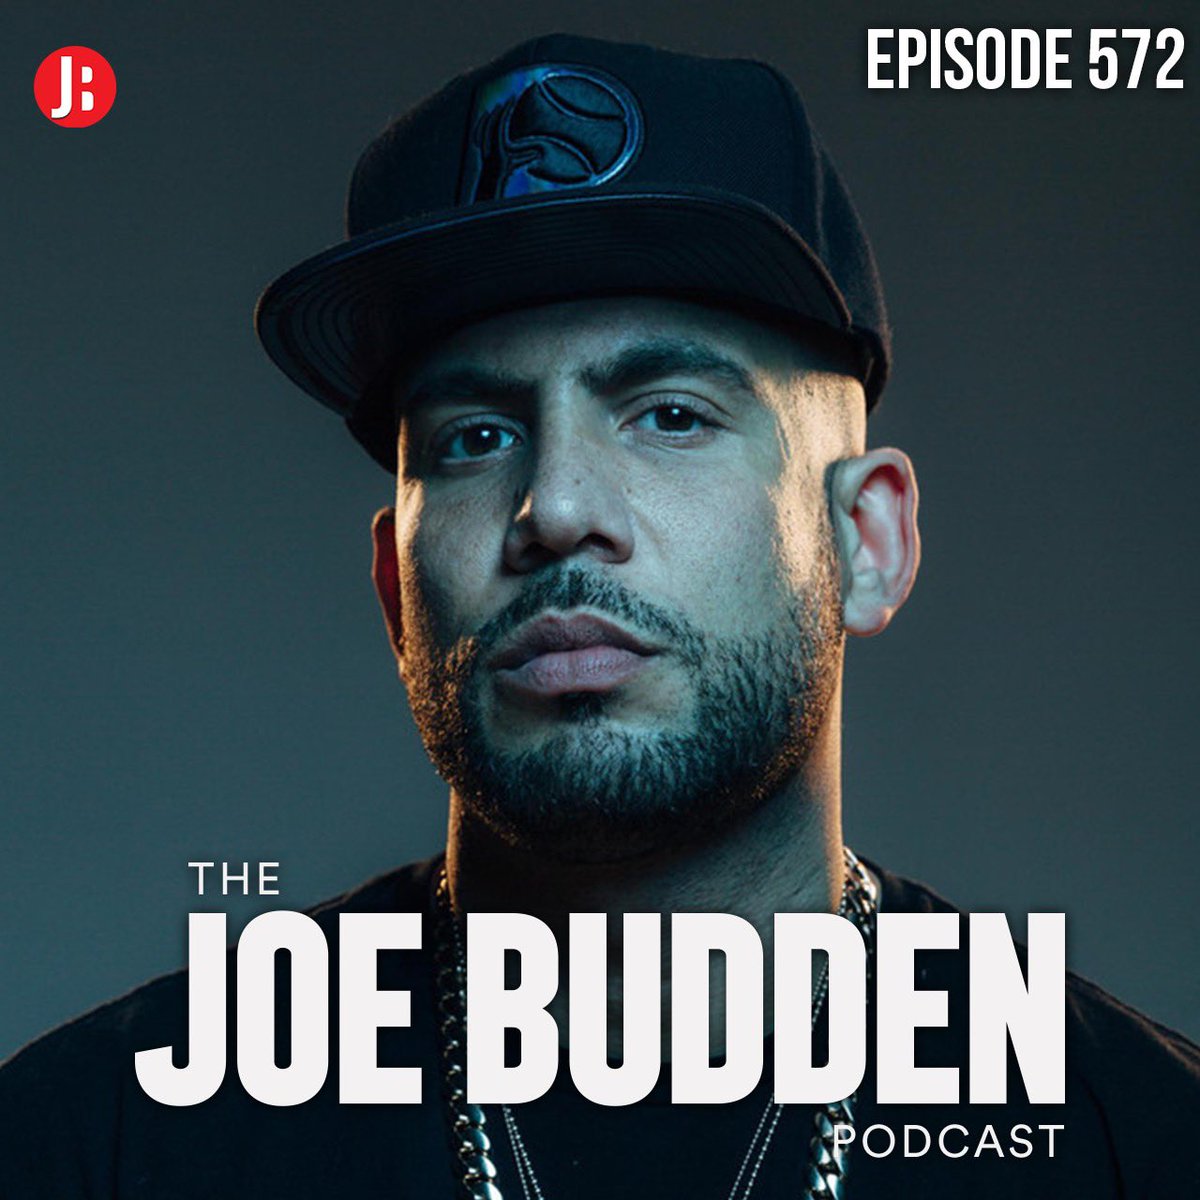 The @JoeBudden Podcast Episode 572 | “No More Teaching” is now available❗️#JBP Tune in 🎧 Apple: apple.co/3gsSL4A 🎧 Google: bit.ly/3eRFH8x 🎧 SoundCloud: bit.ly/3So10MK 🎧 Spotify: spoti.fi/3VT0wko 🎥 Patreon: patreon.com/joebudden